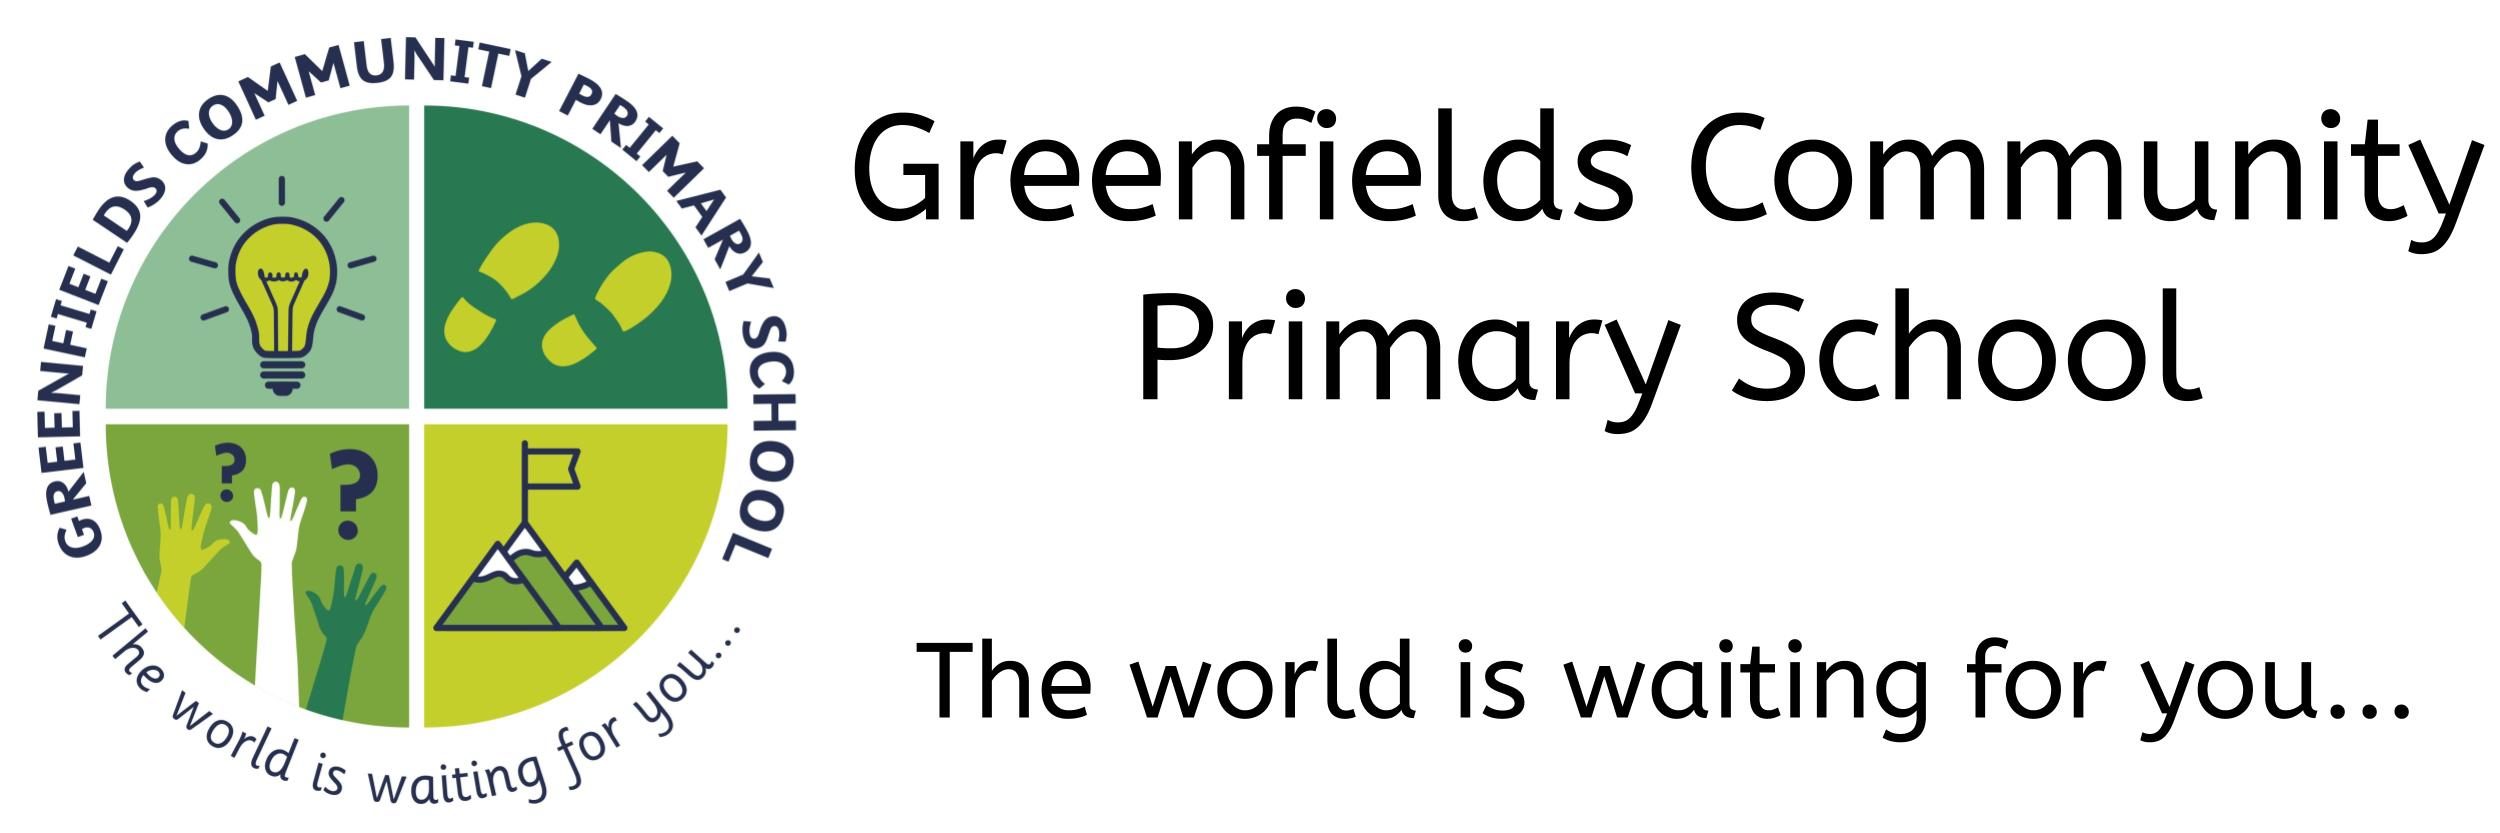 Greenfields Community Primary School